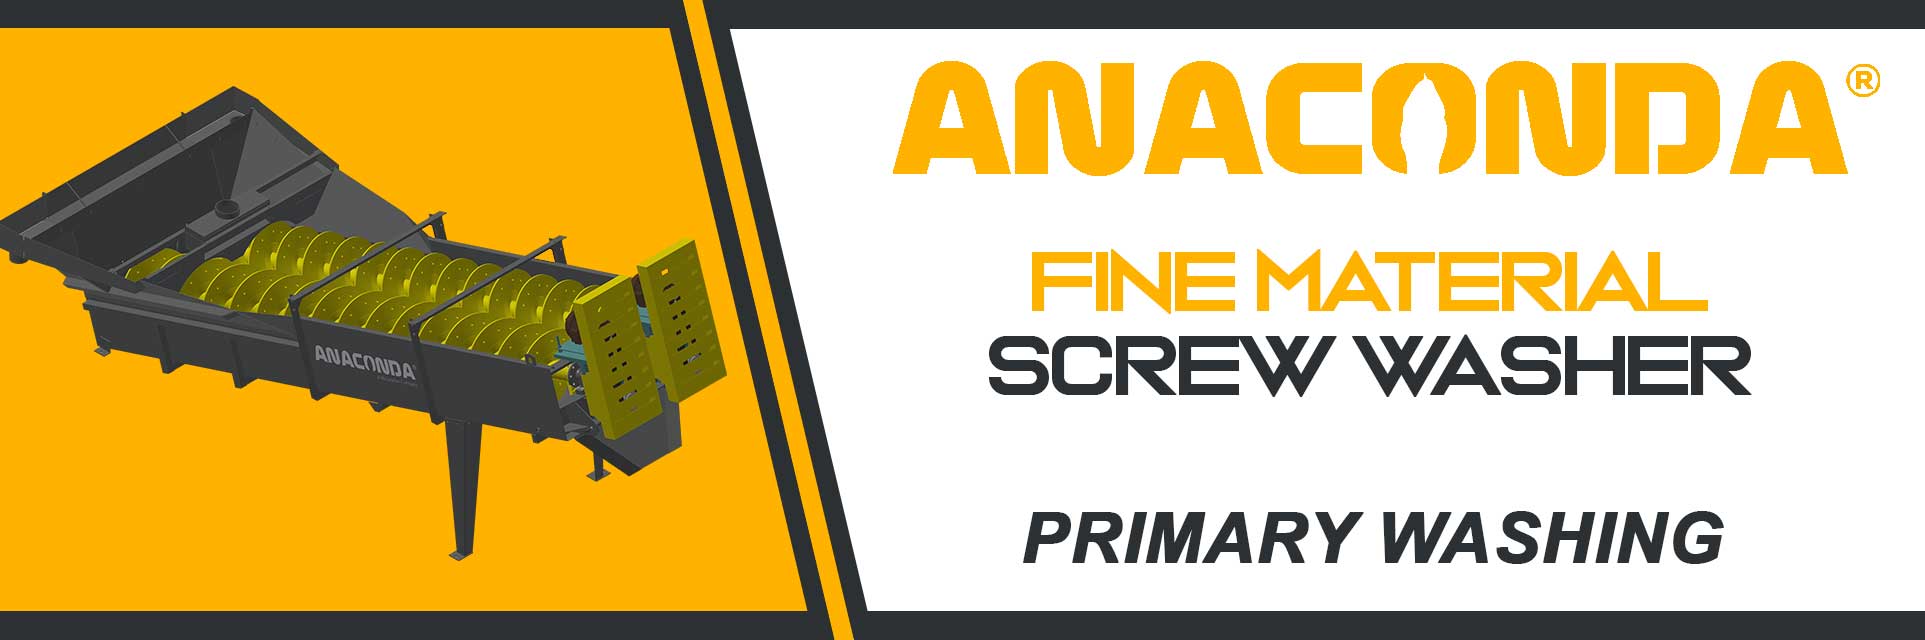 Fine Material Screw Washer Banner for Desktop